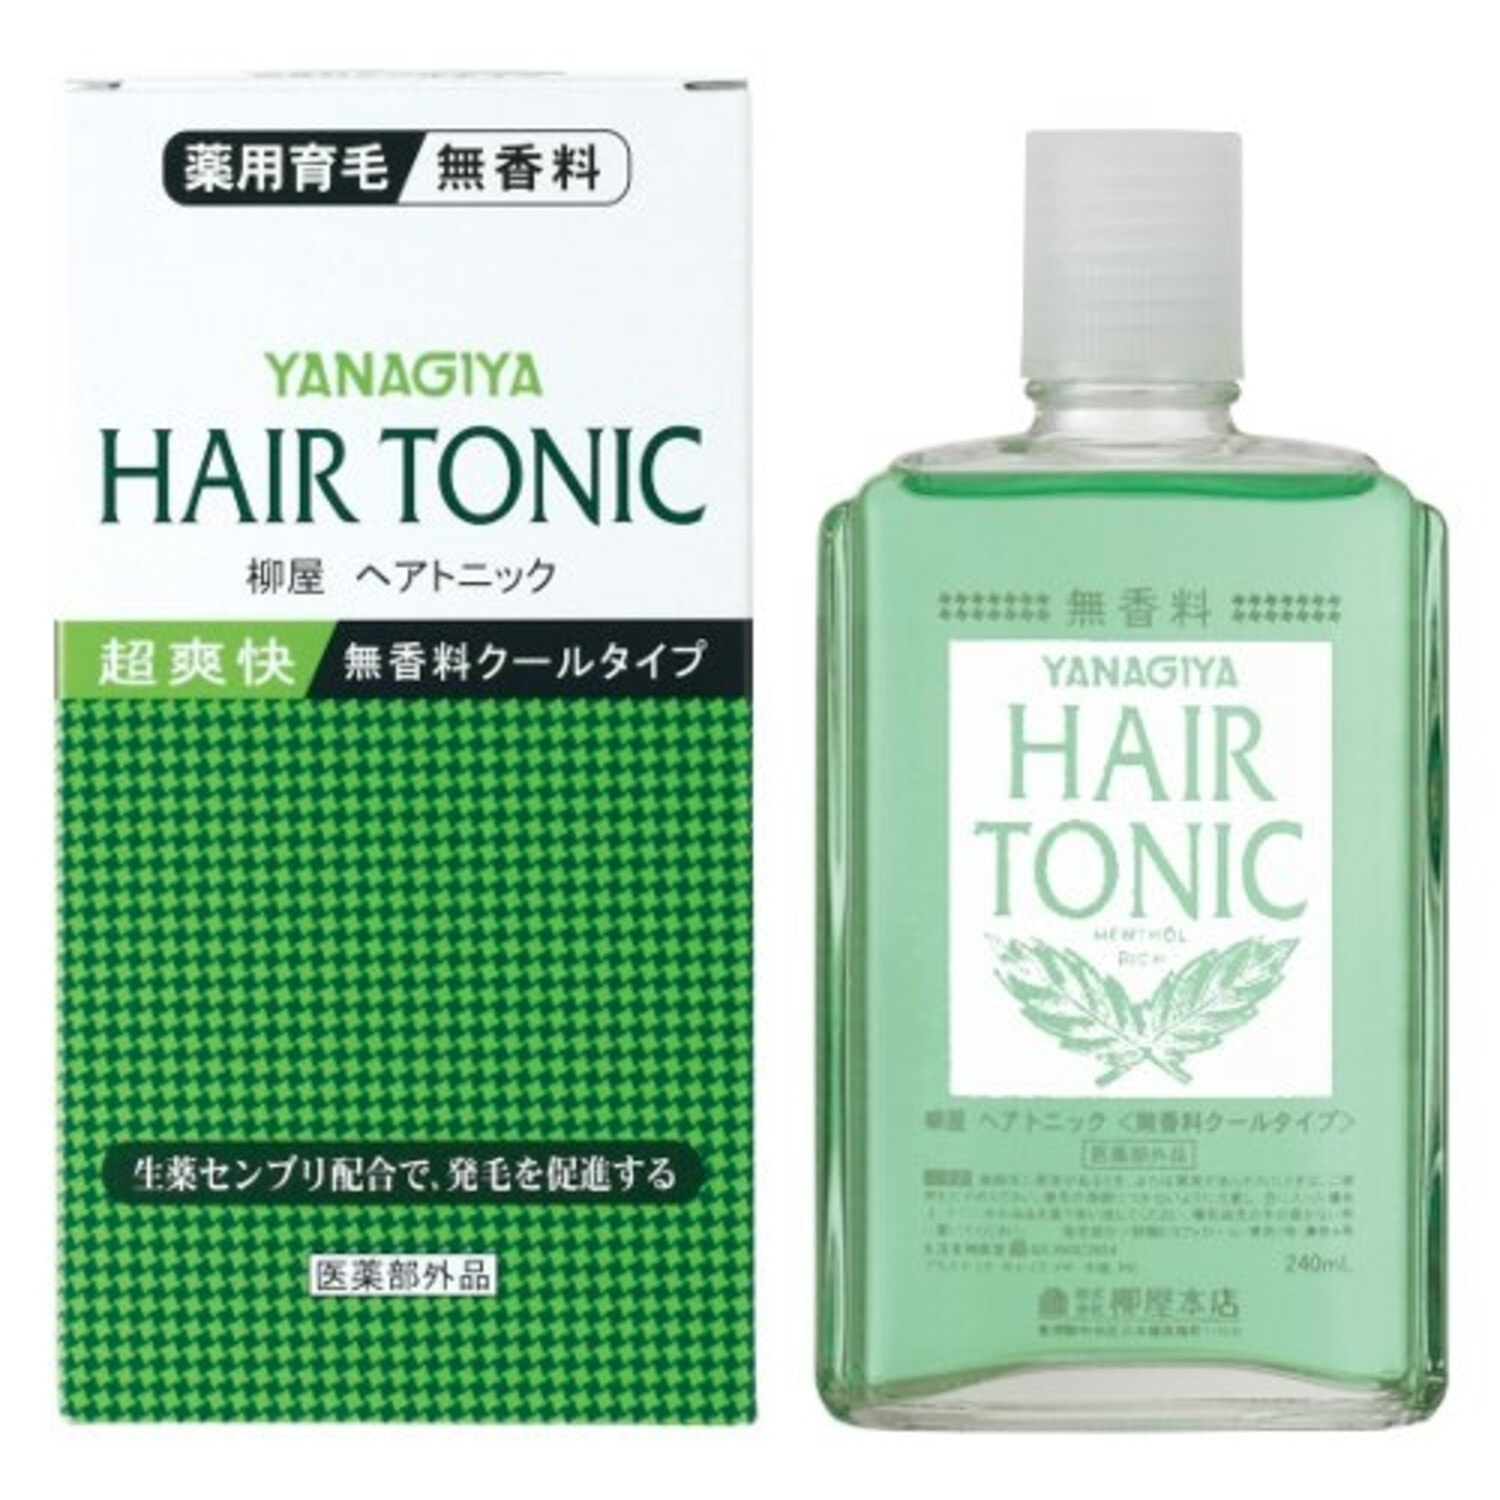 Yanagiya Hair Tonic  Тоник для роста волос, 240 мл. / 113808